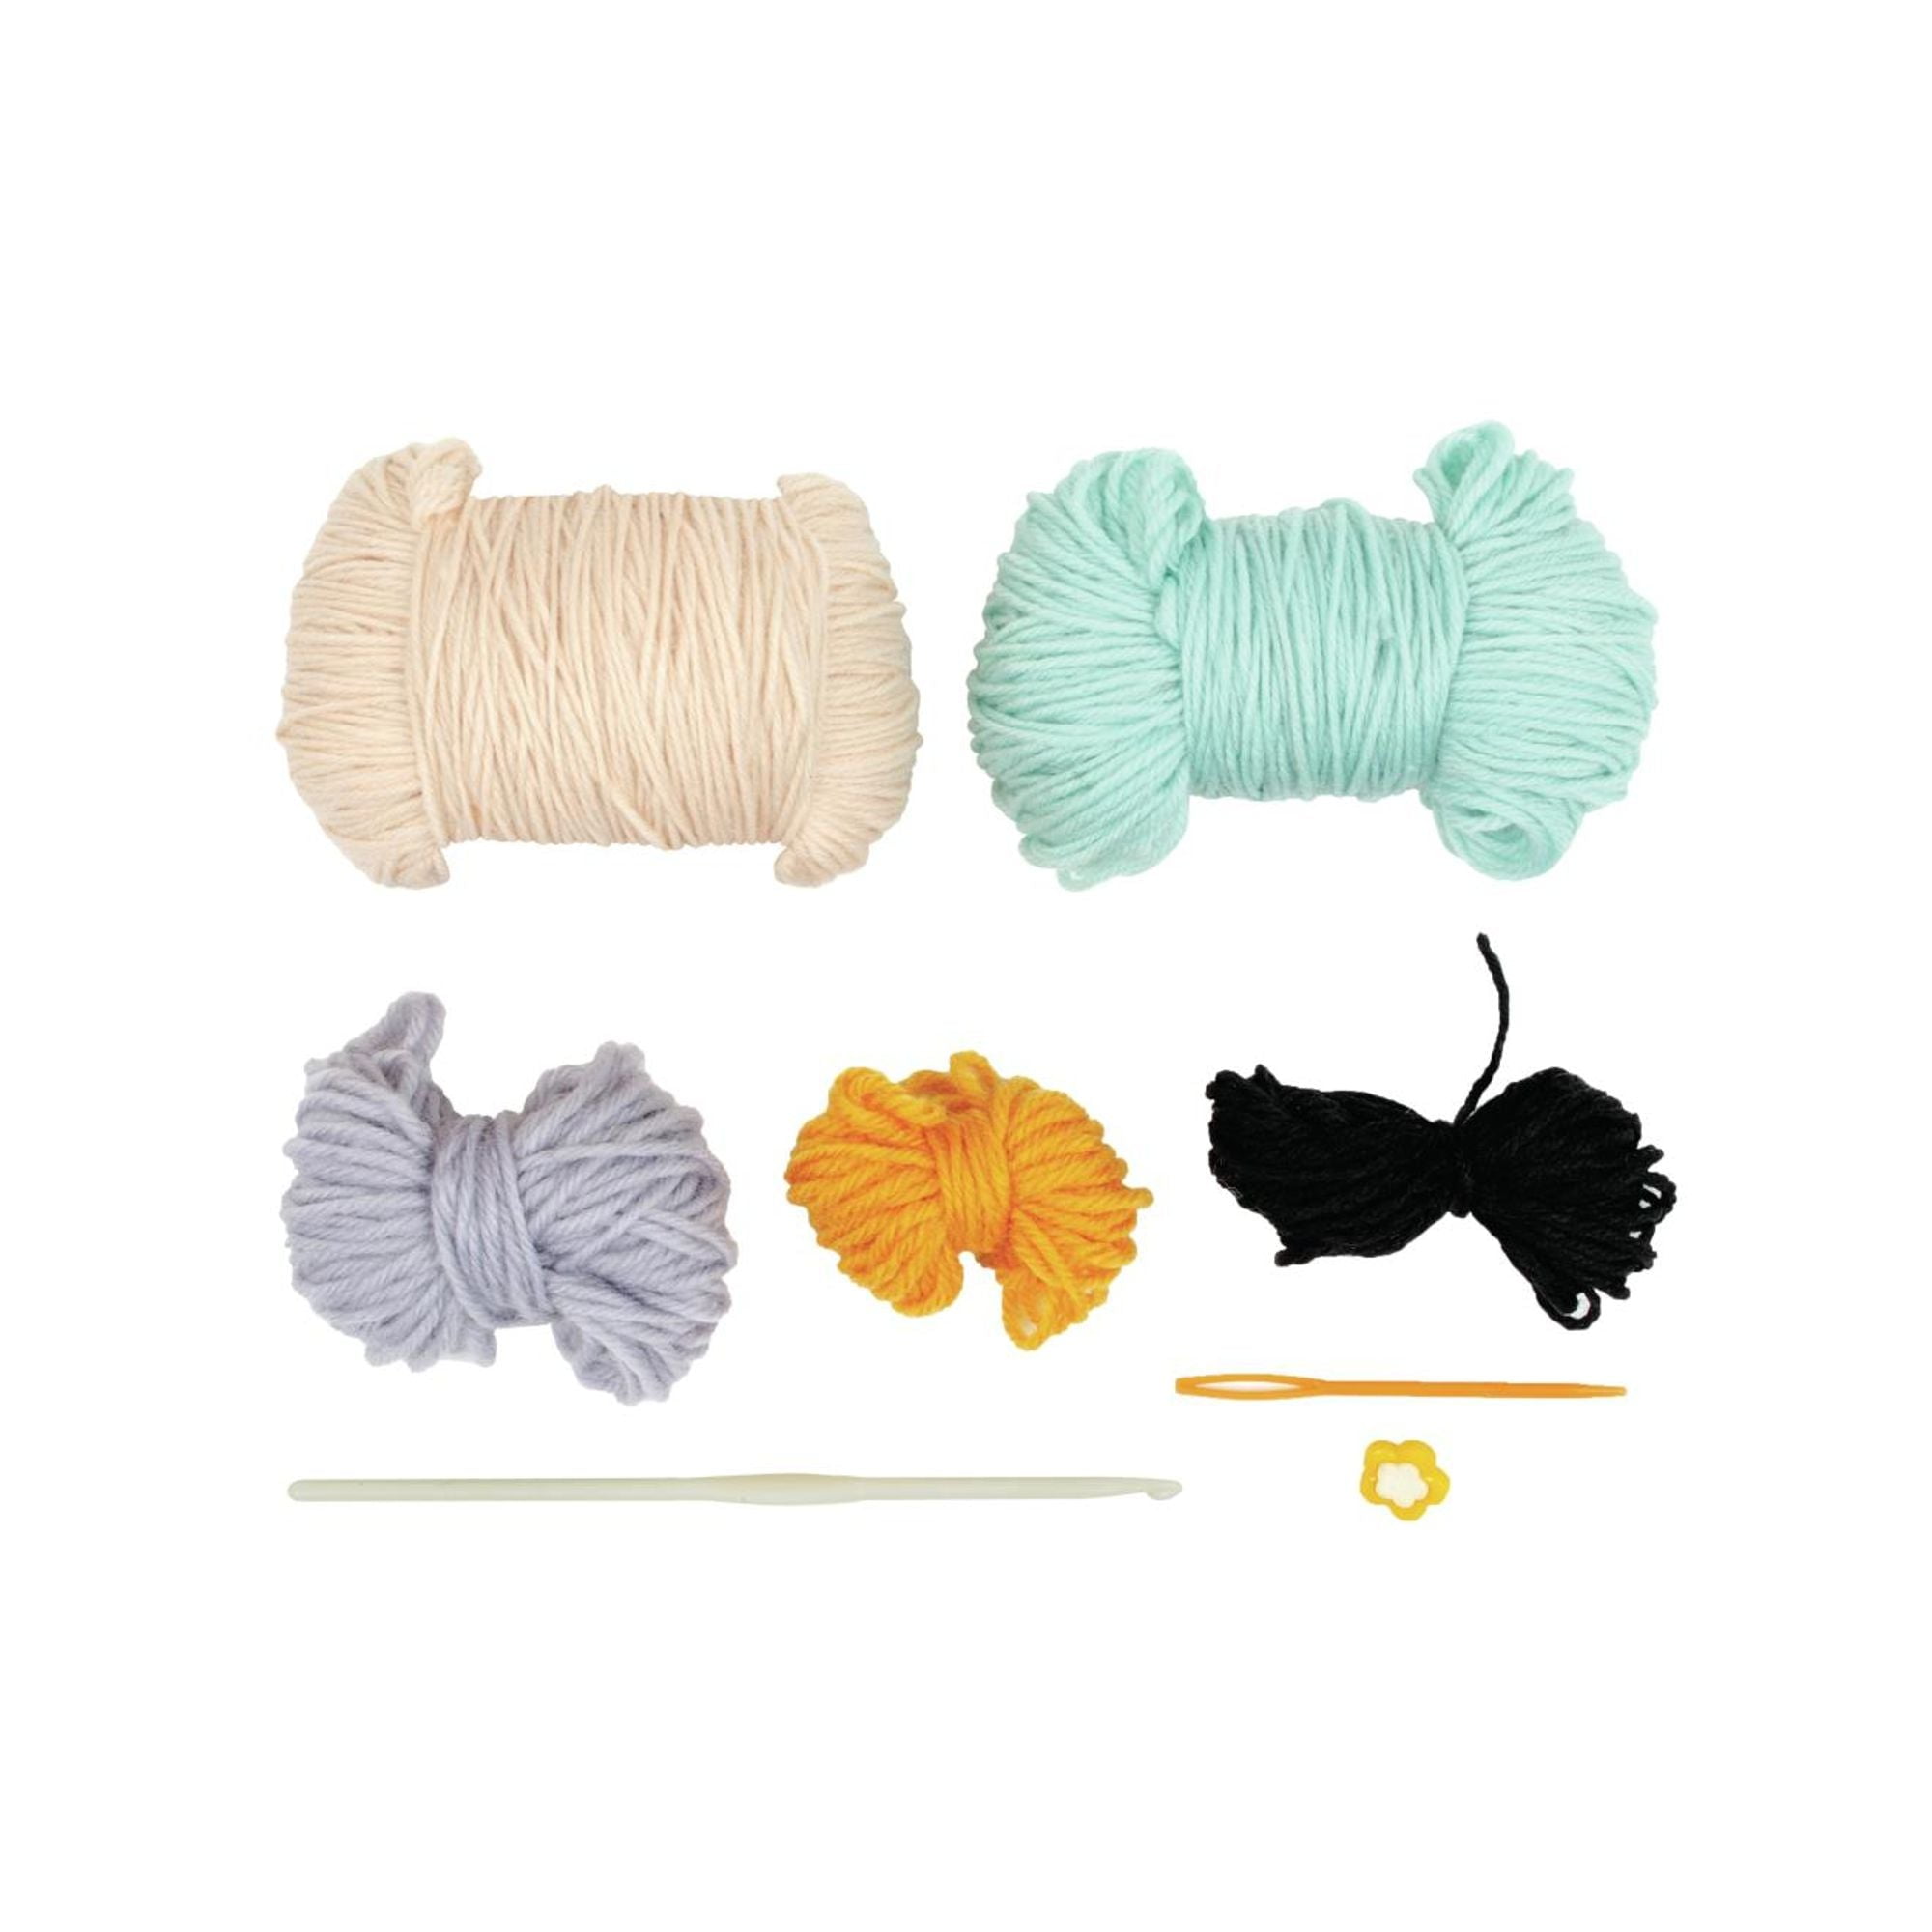 Needle Creations Crochet Kits